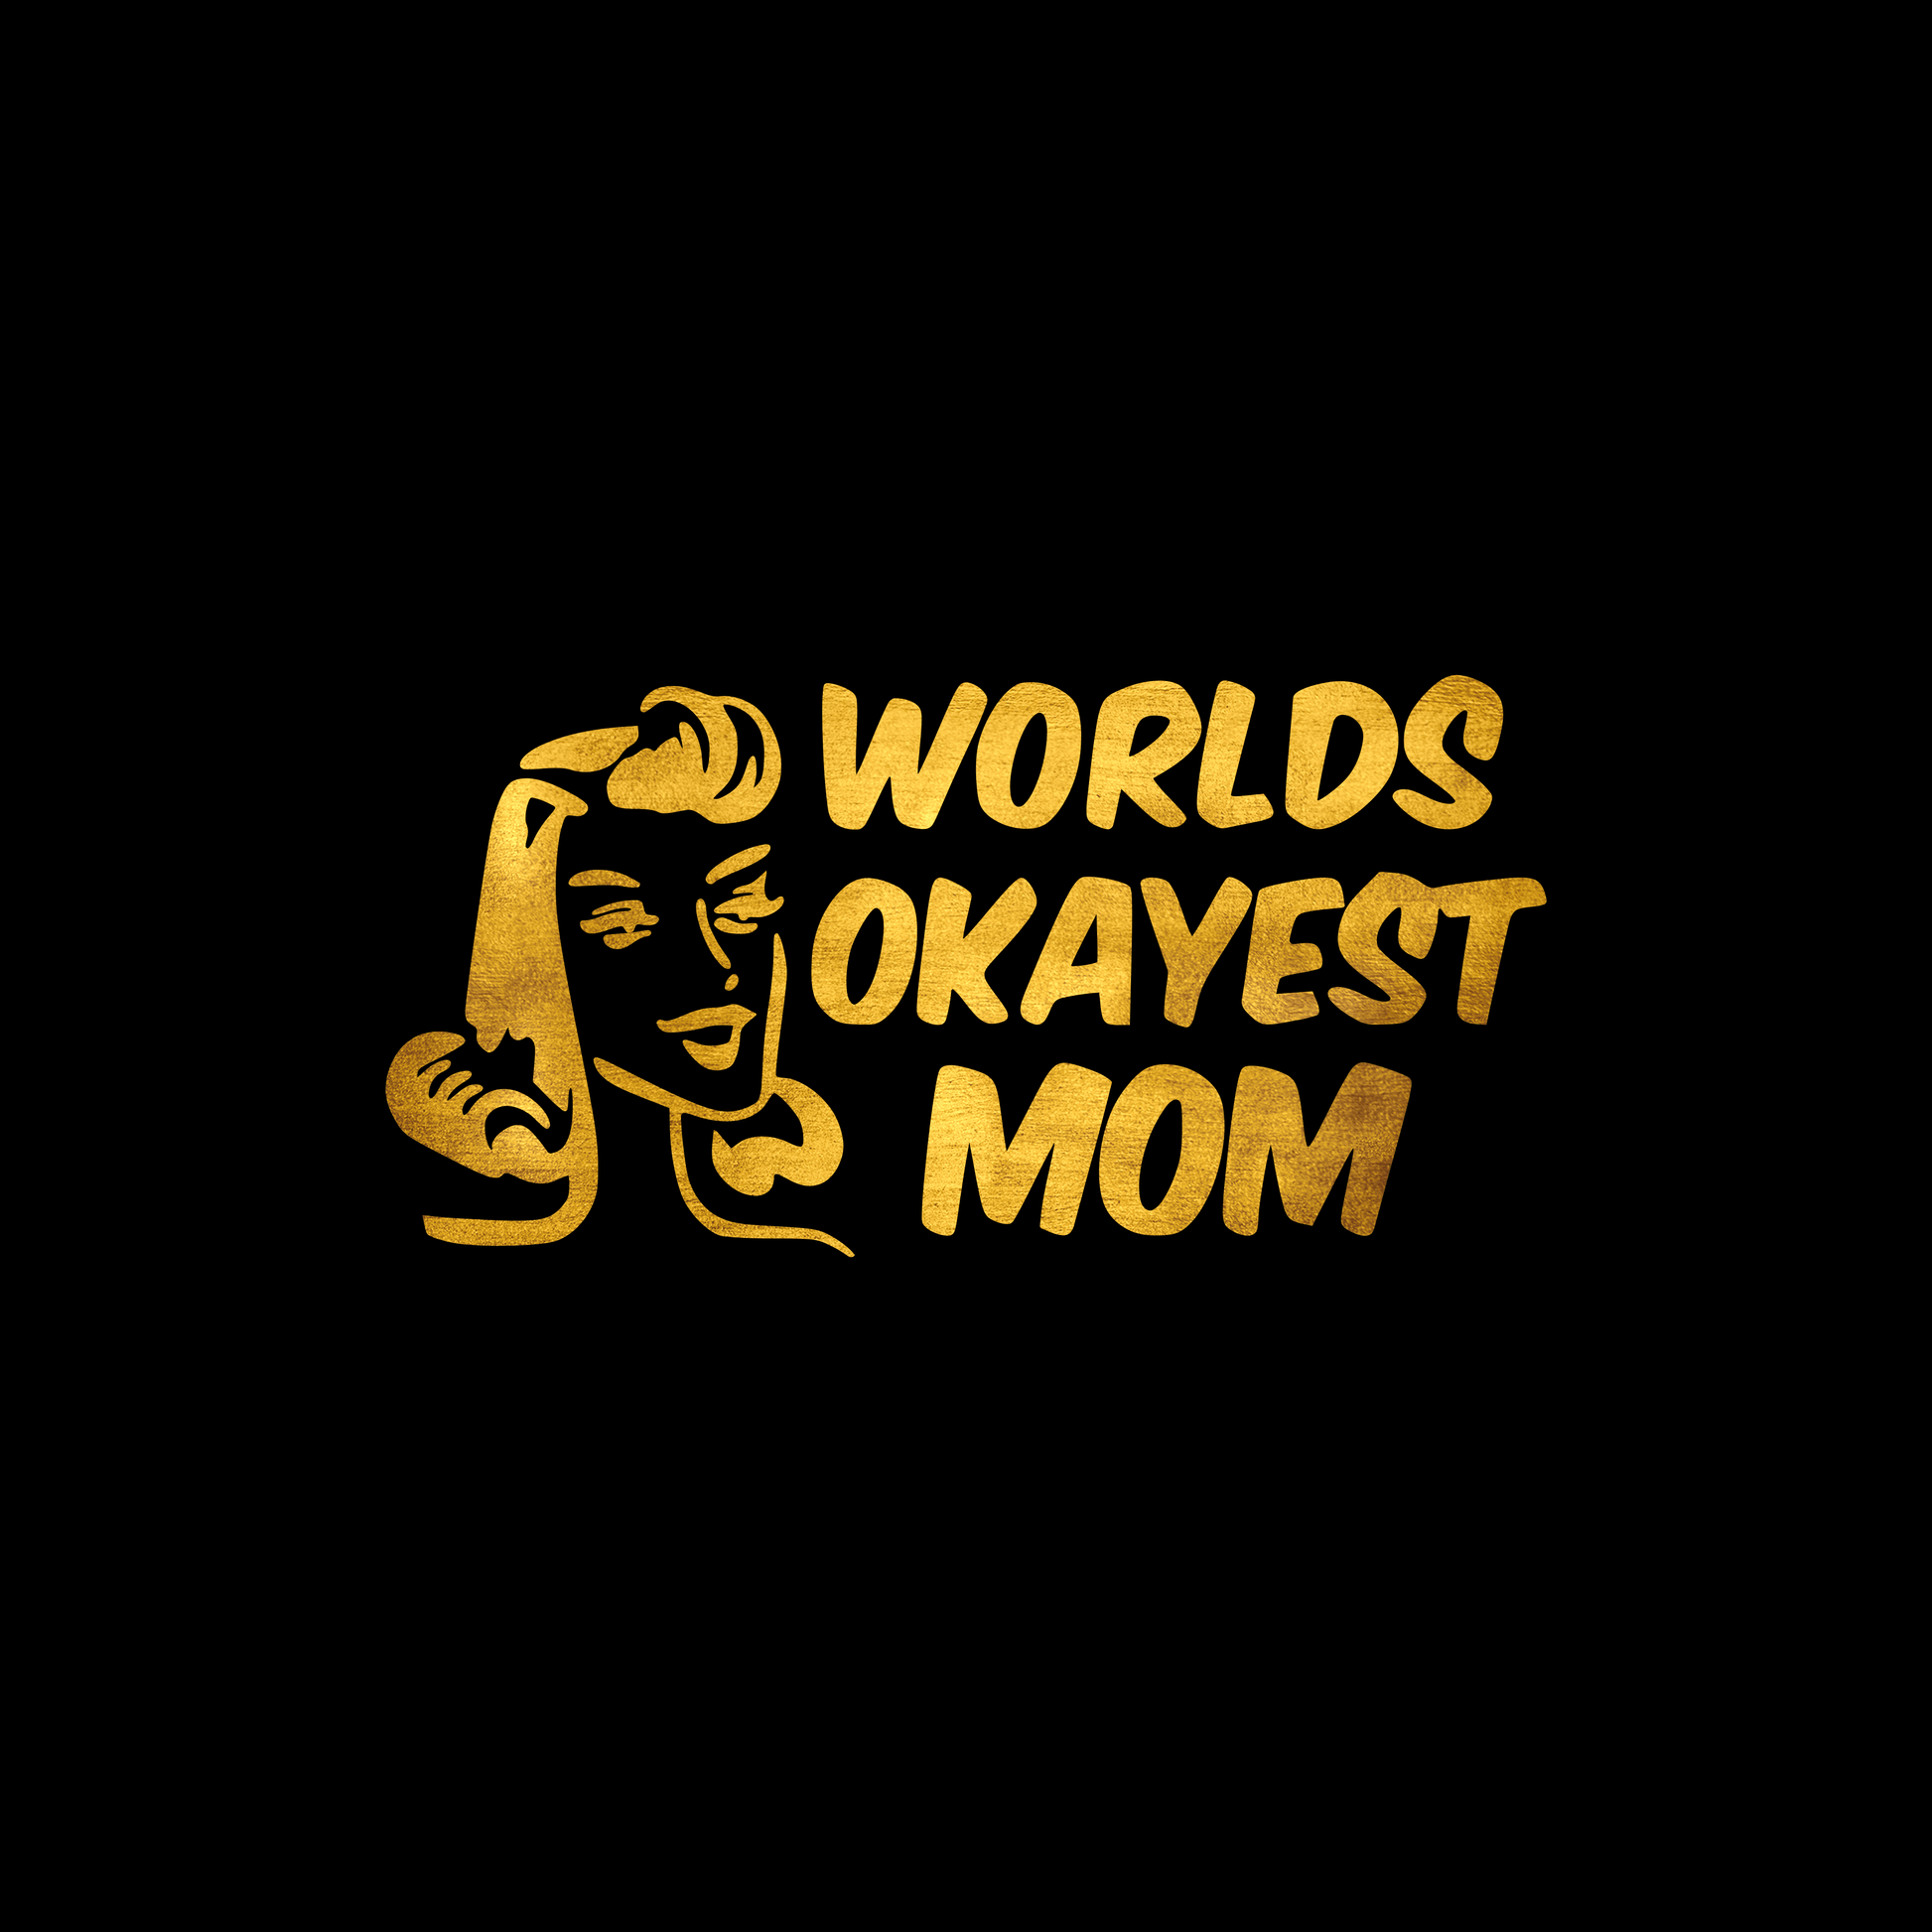 Worlds okayest mom sticker decal